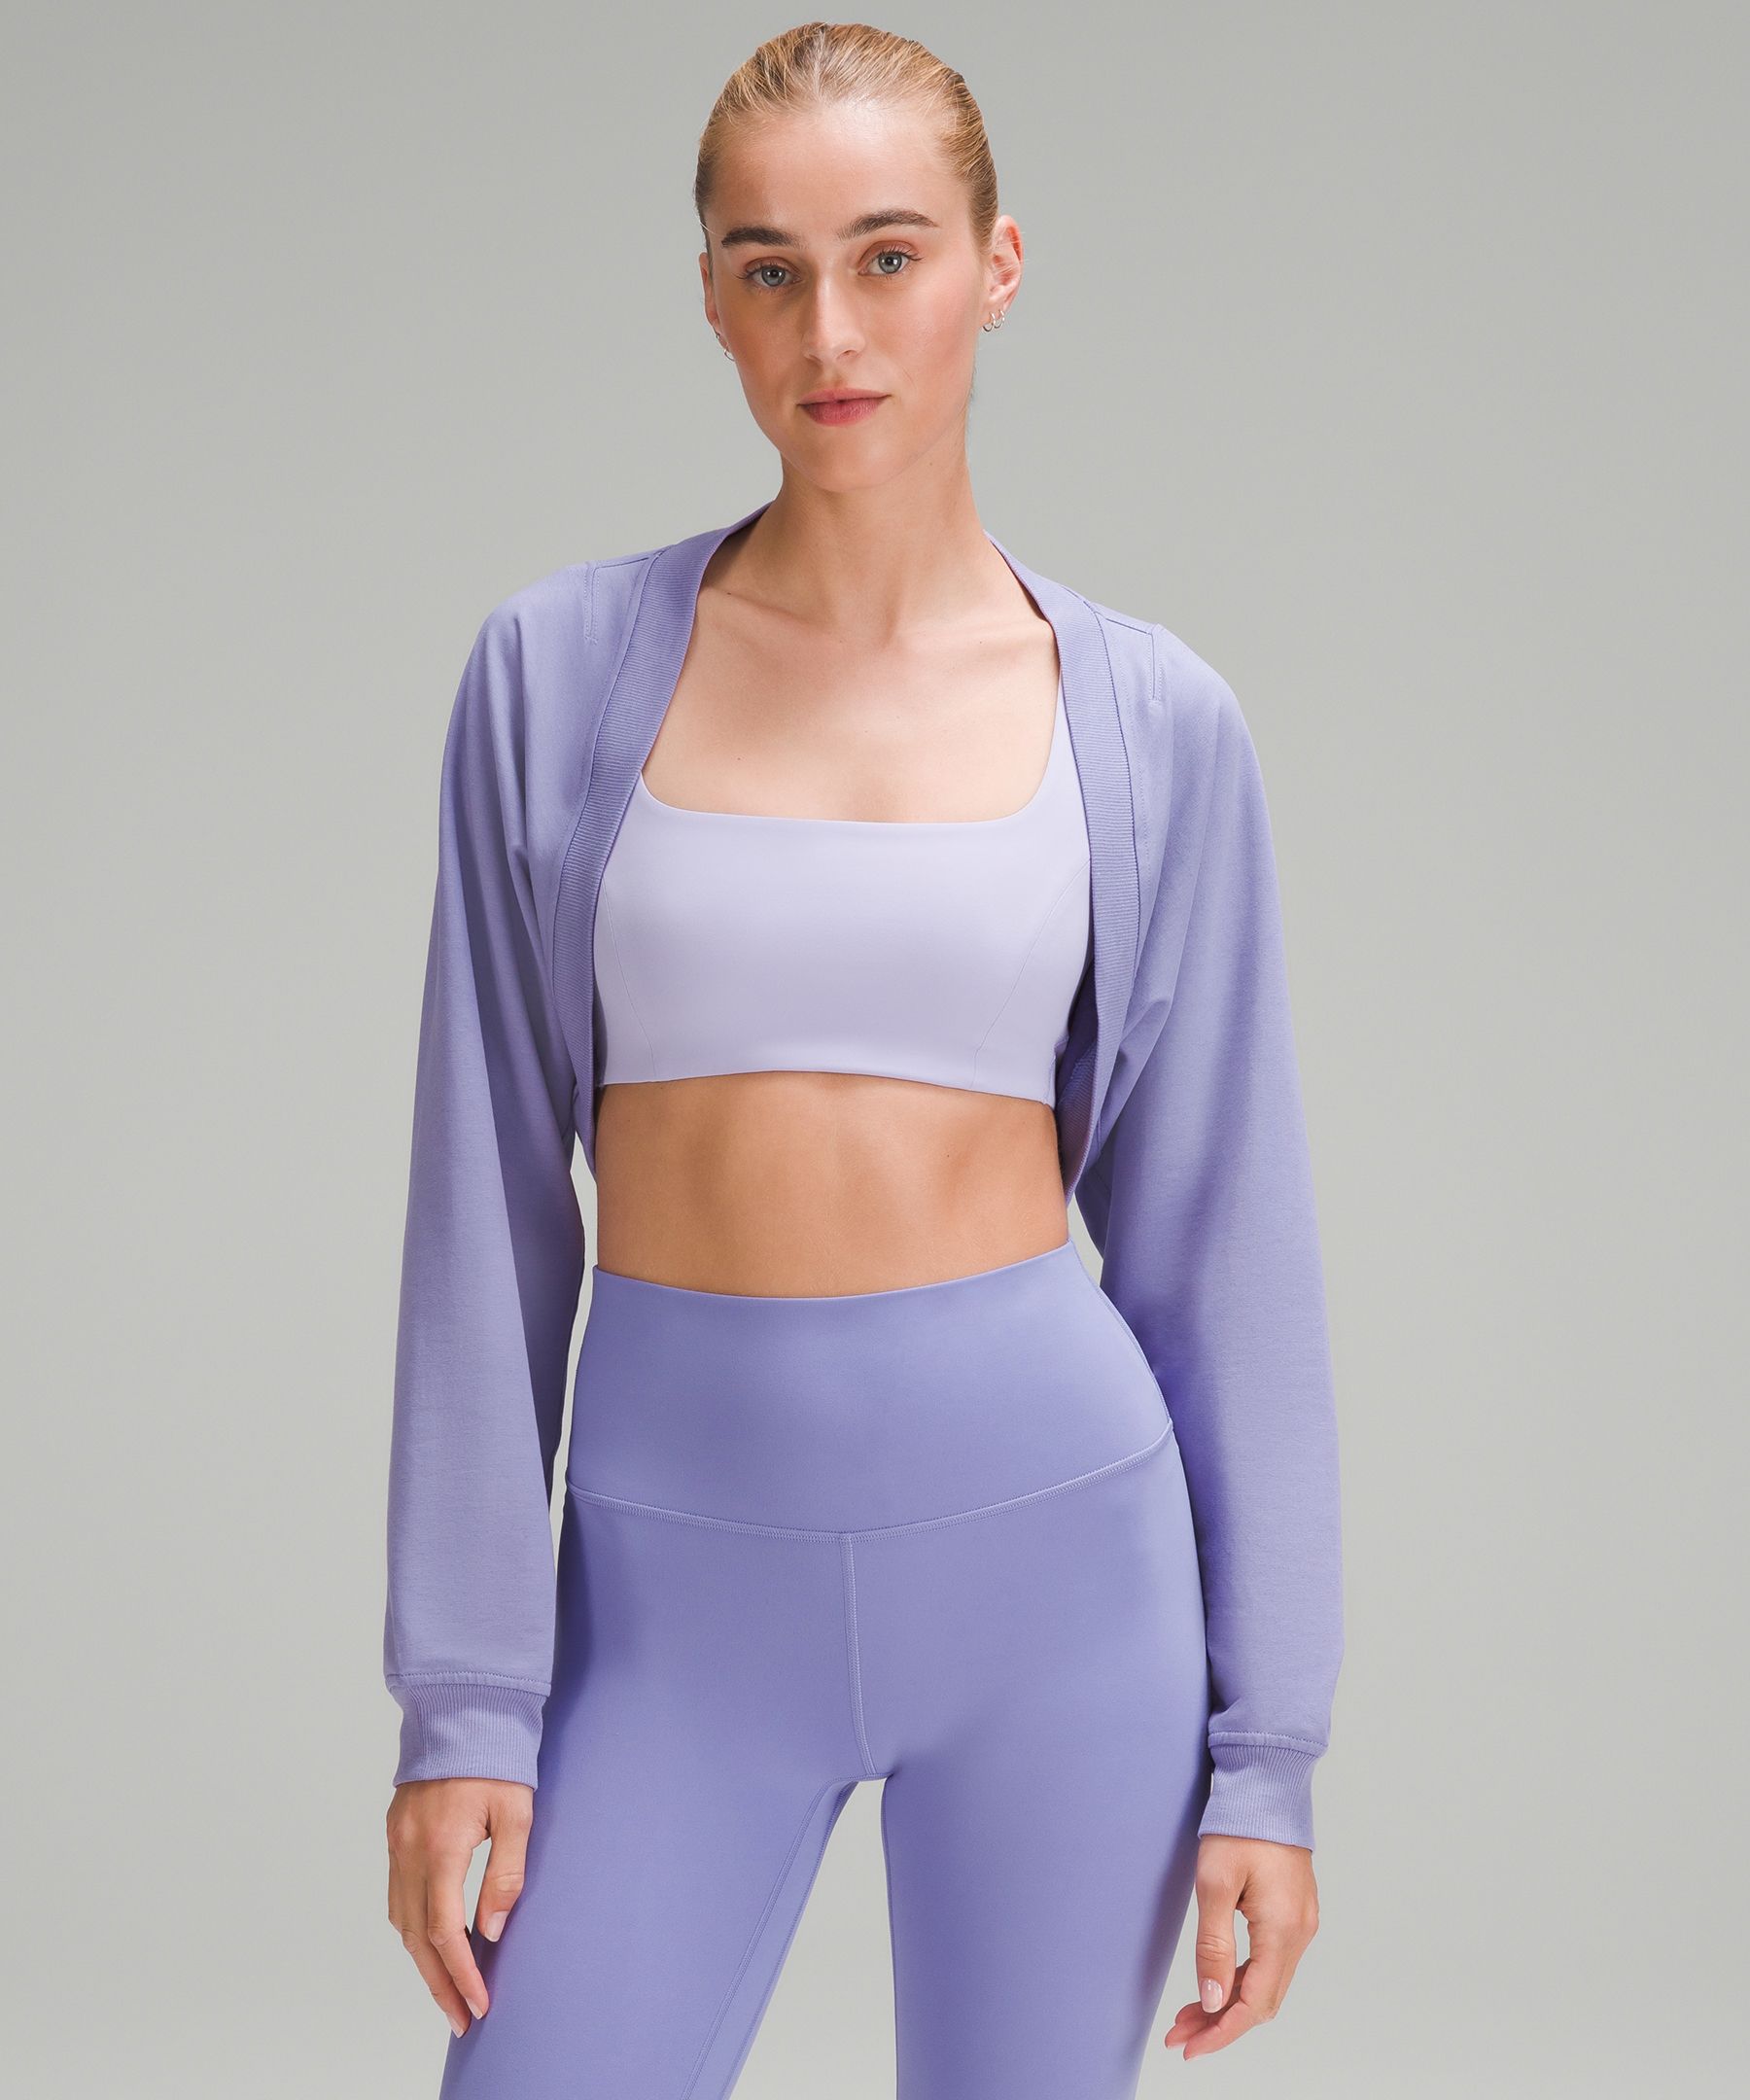 Lululemon Women's Size 10 Purple Sweater – Off The Rack